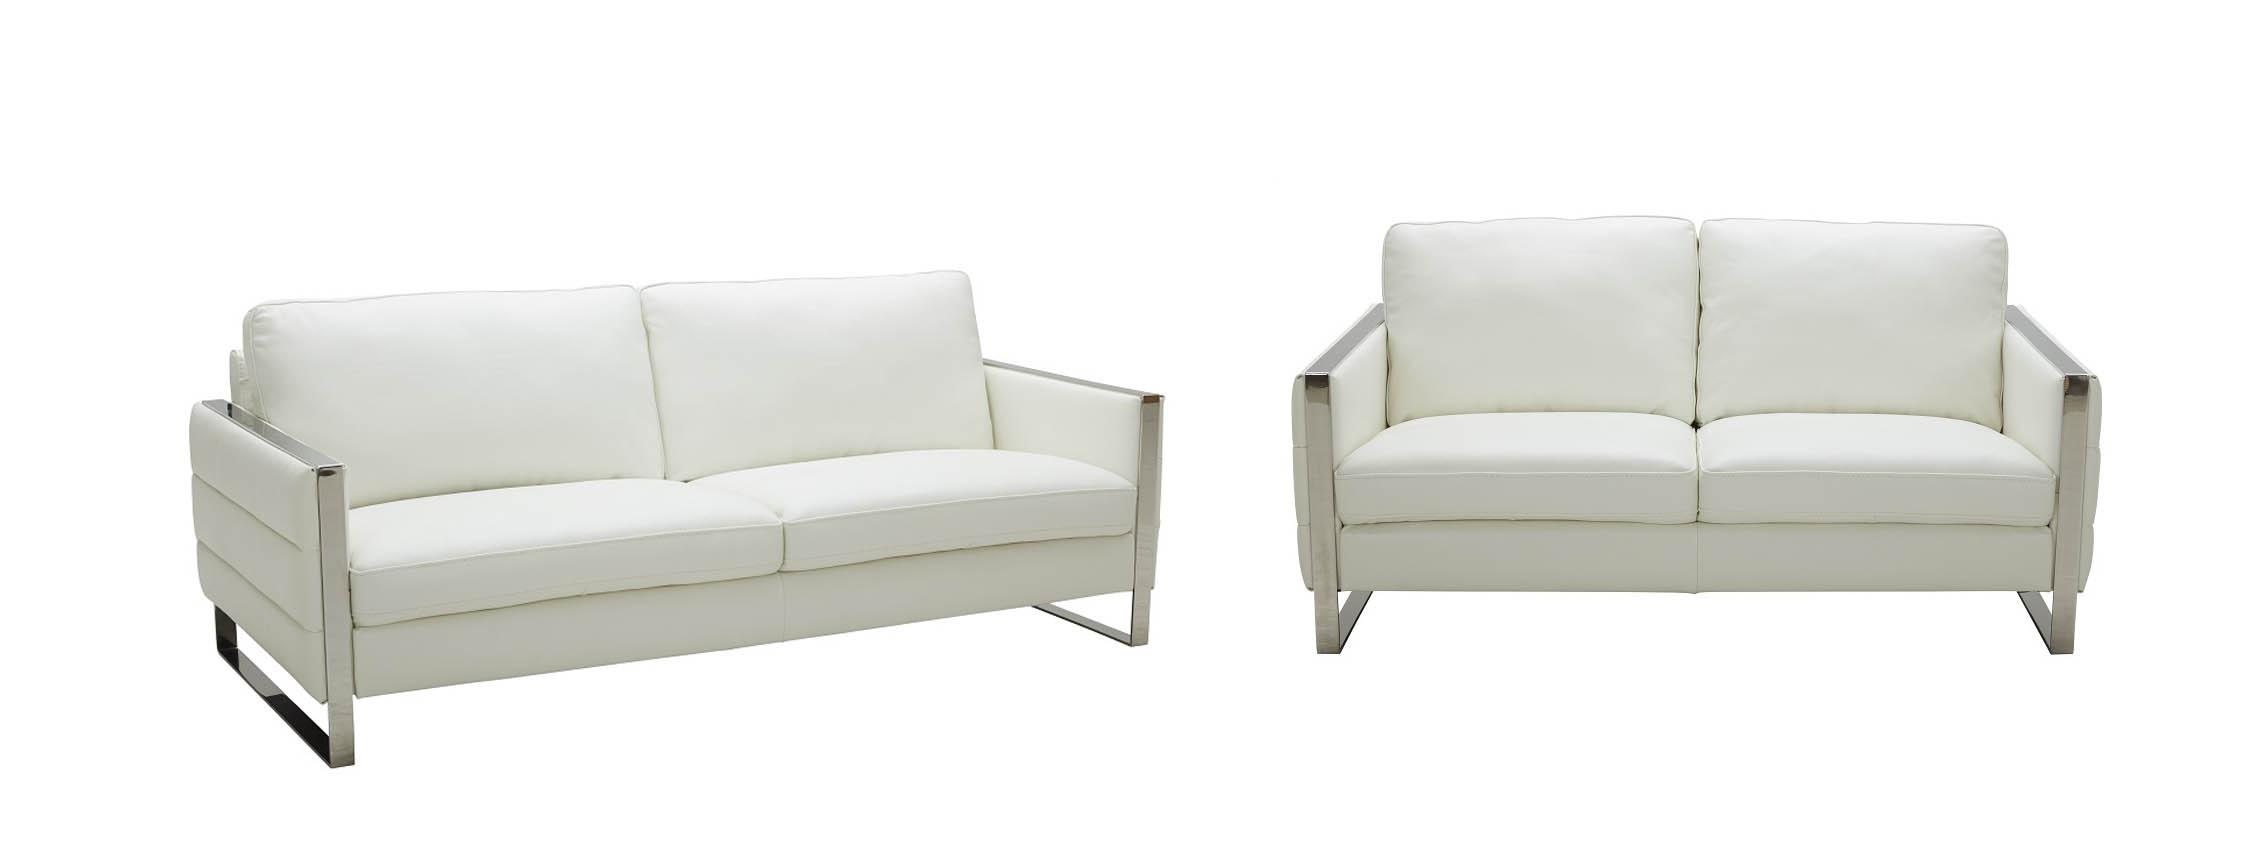 Contemporary Sofa and Loveseat Set Constantin SKU18571-Sofa Set-2 in White Italian Leather